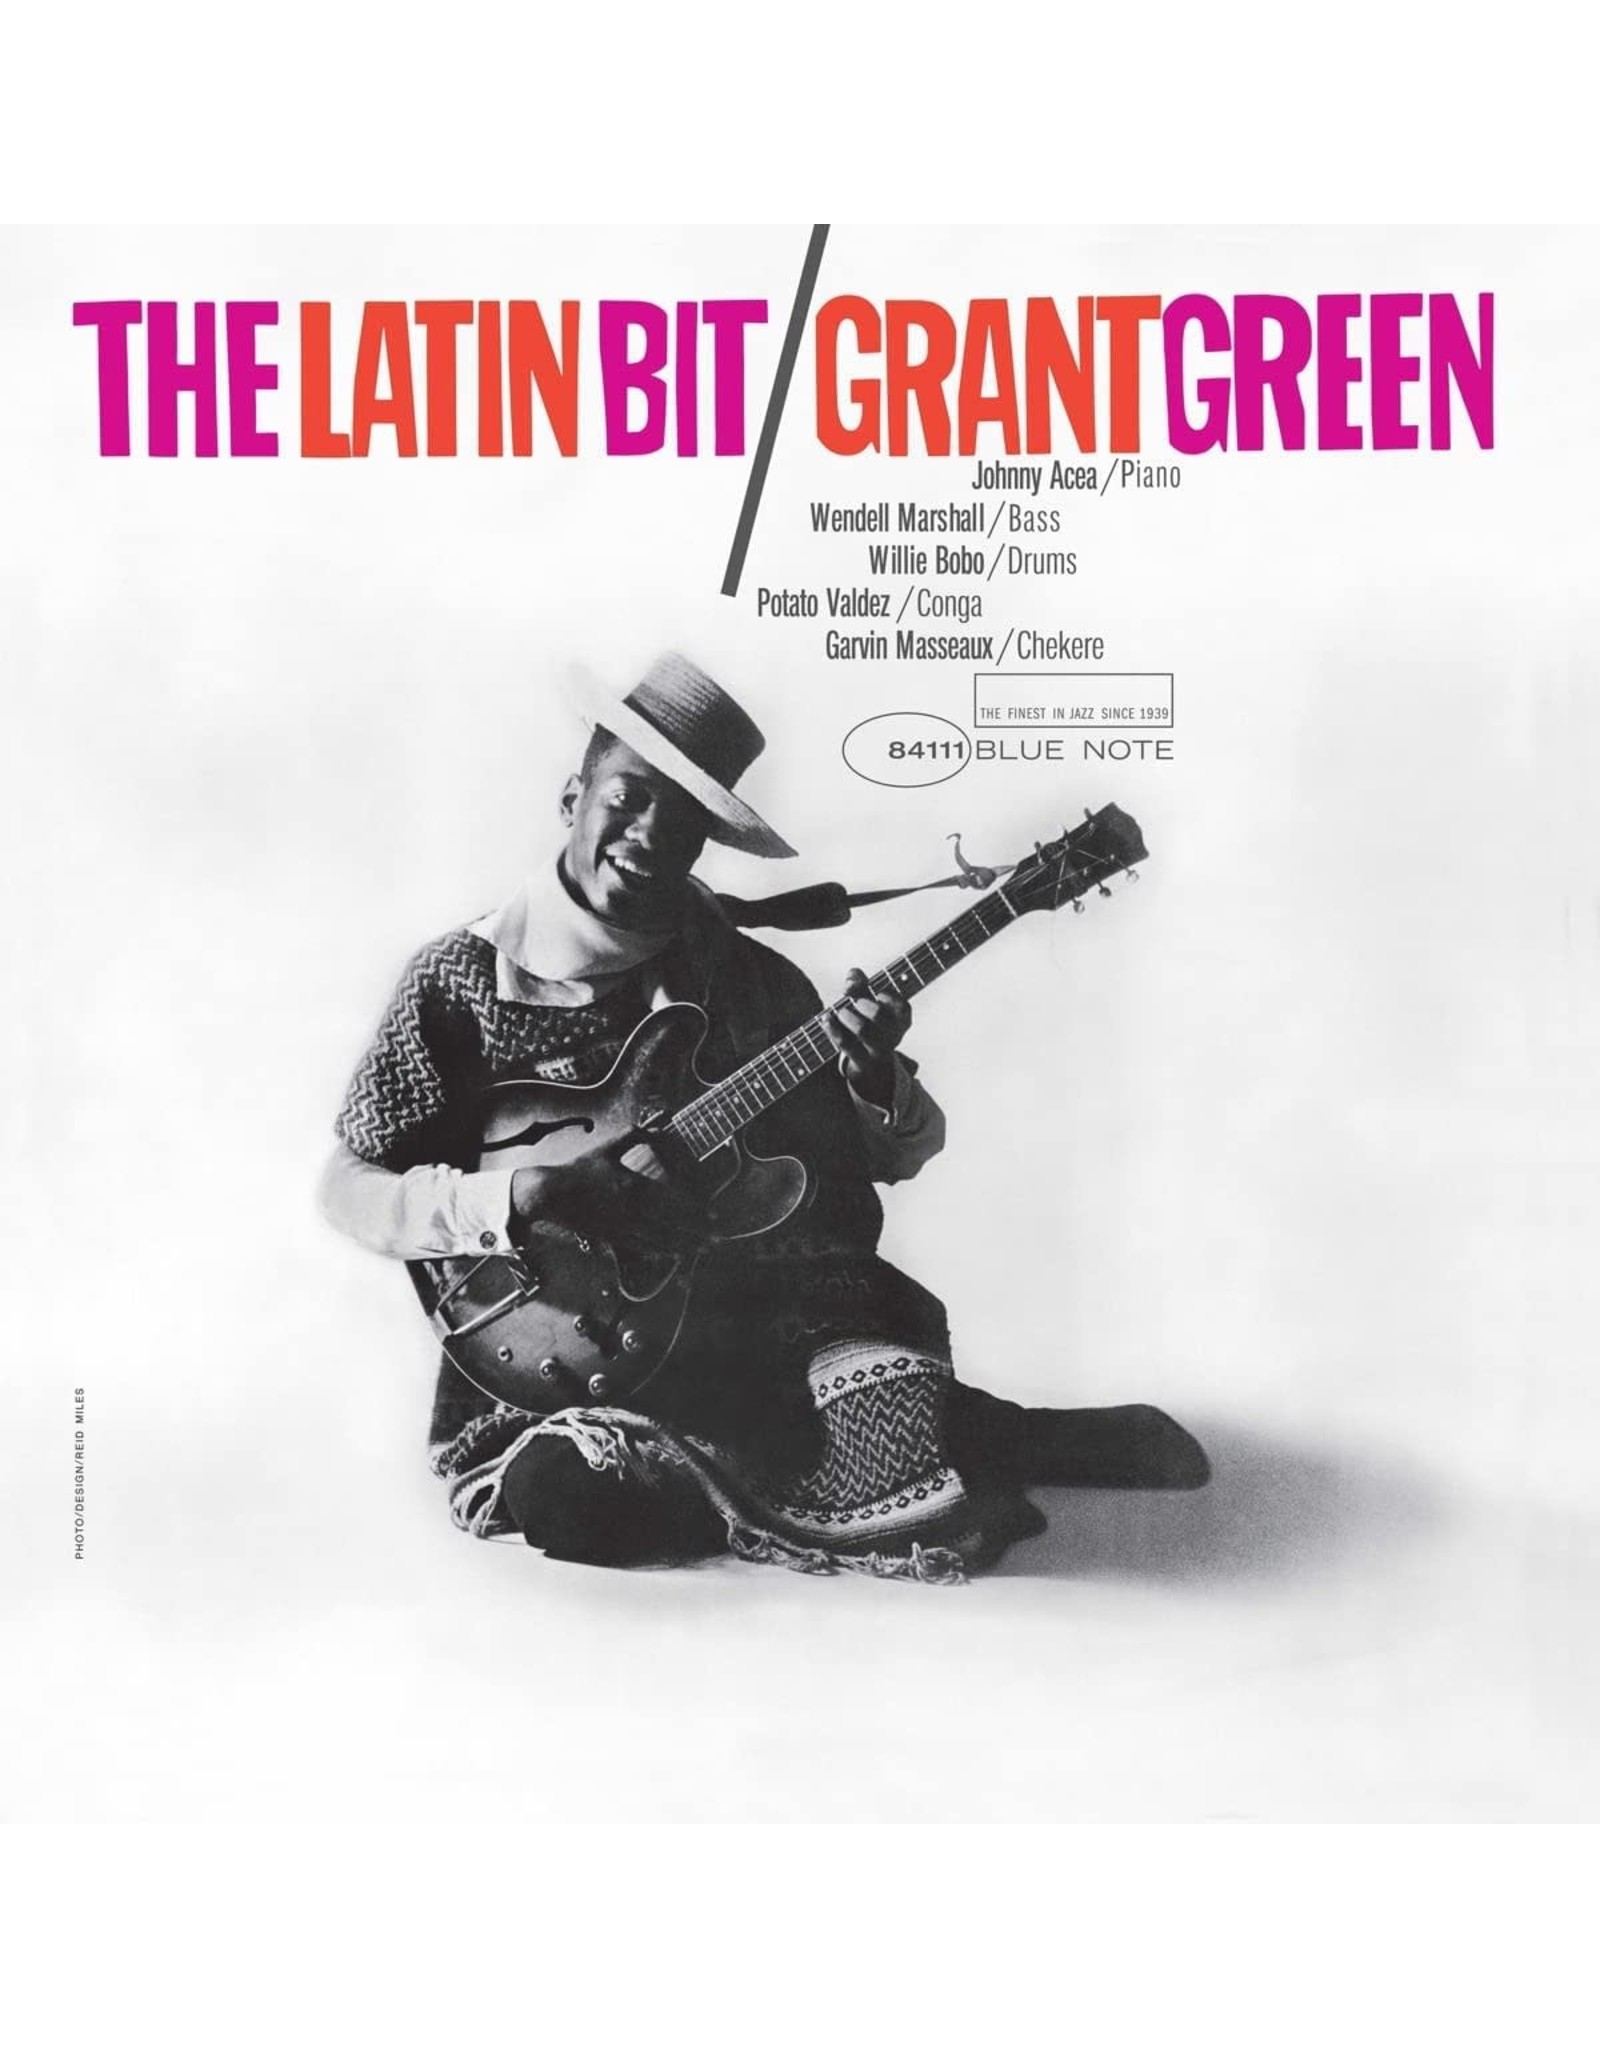 Grant Green - The Latin Bit (Blue Note Tone Poet)